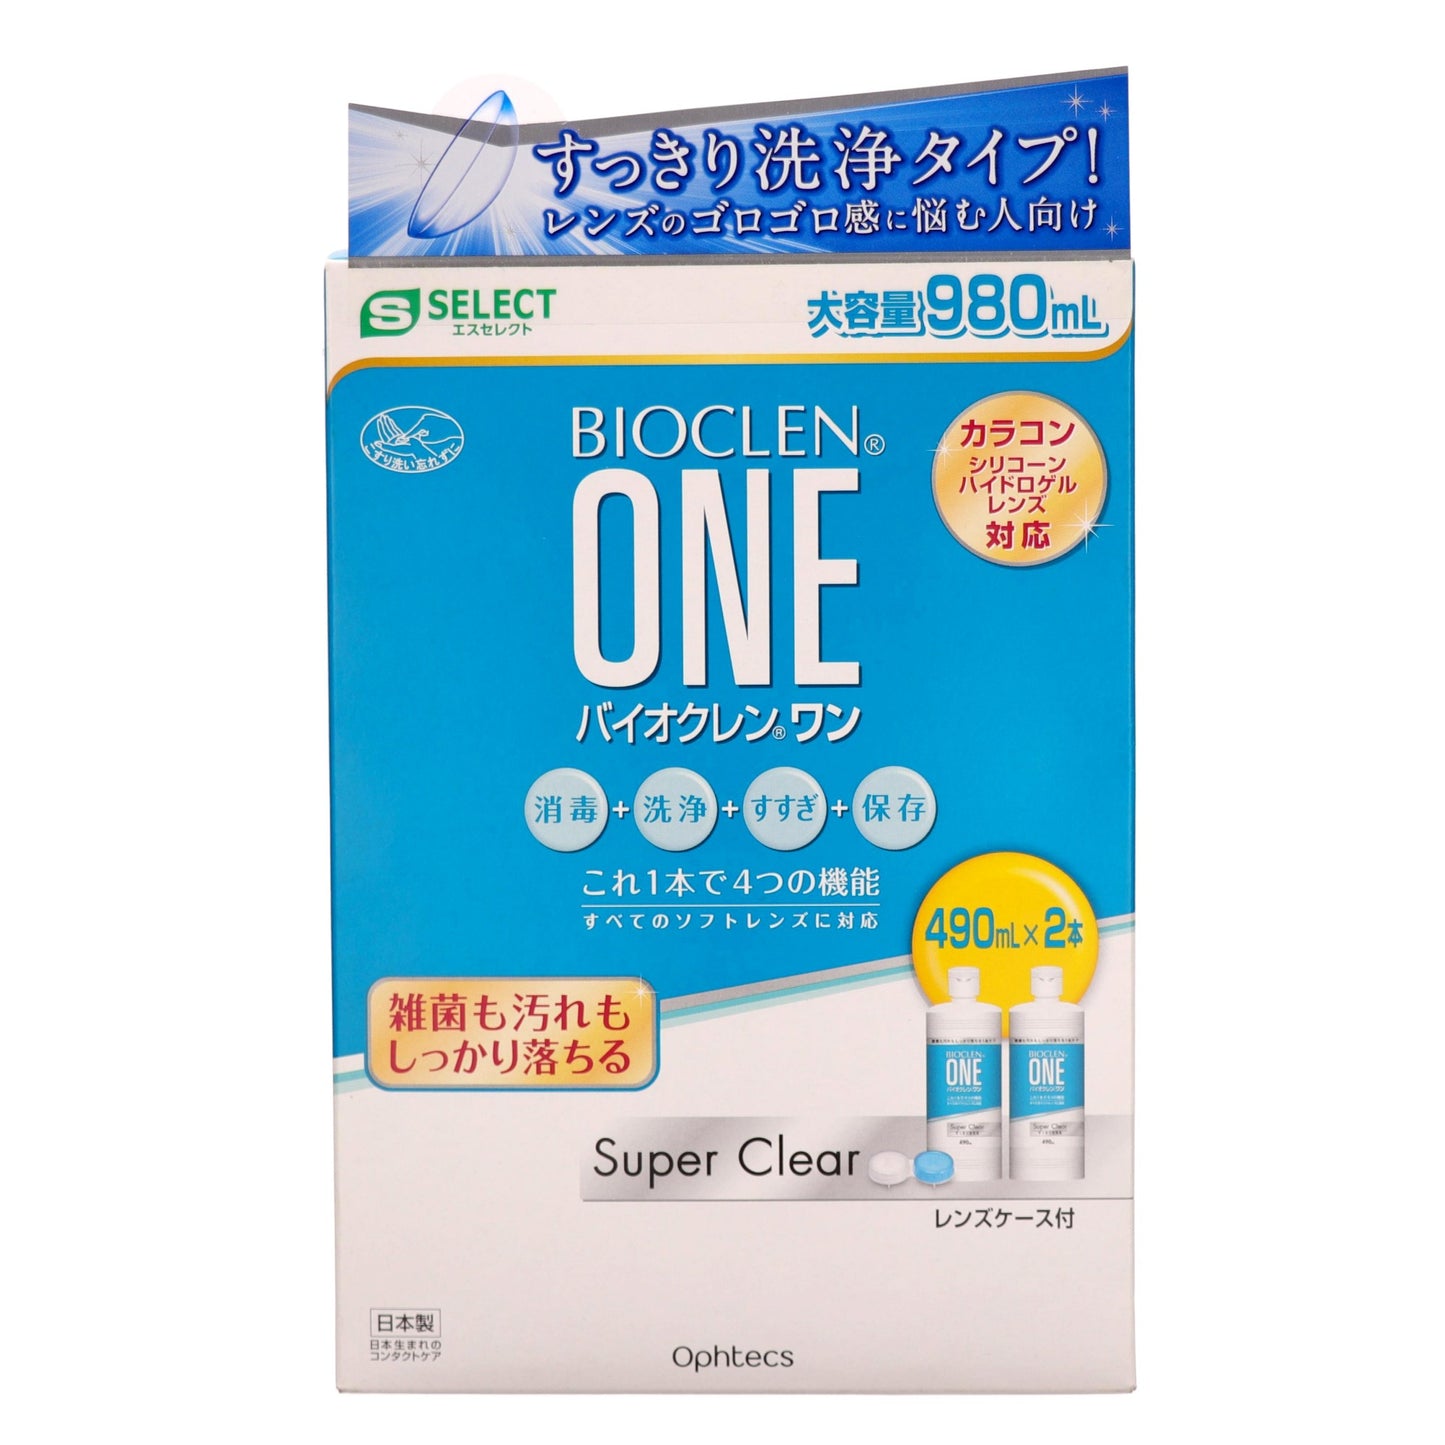 【S-SELECT】Bio Clean One 超清晰 隱眼清潔保養液